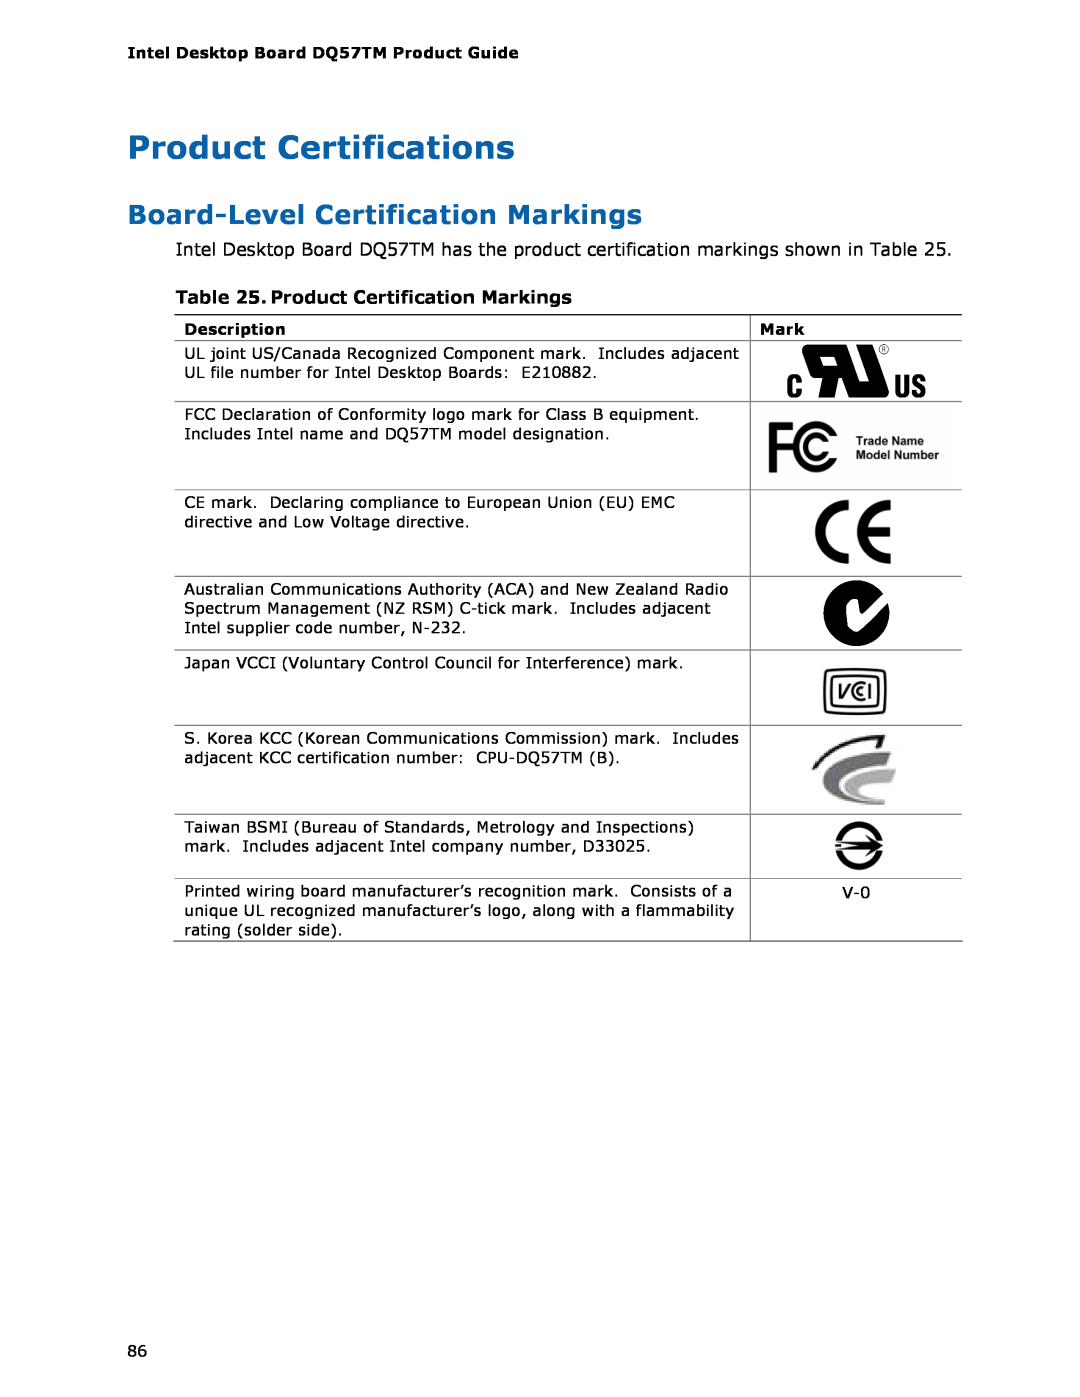 Intel DQ57TM manual Product Certifications, Board-LevelCertification Markings, Product Certification Markings 